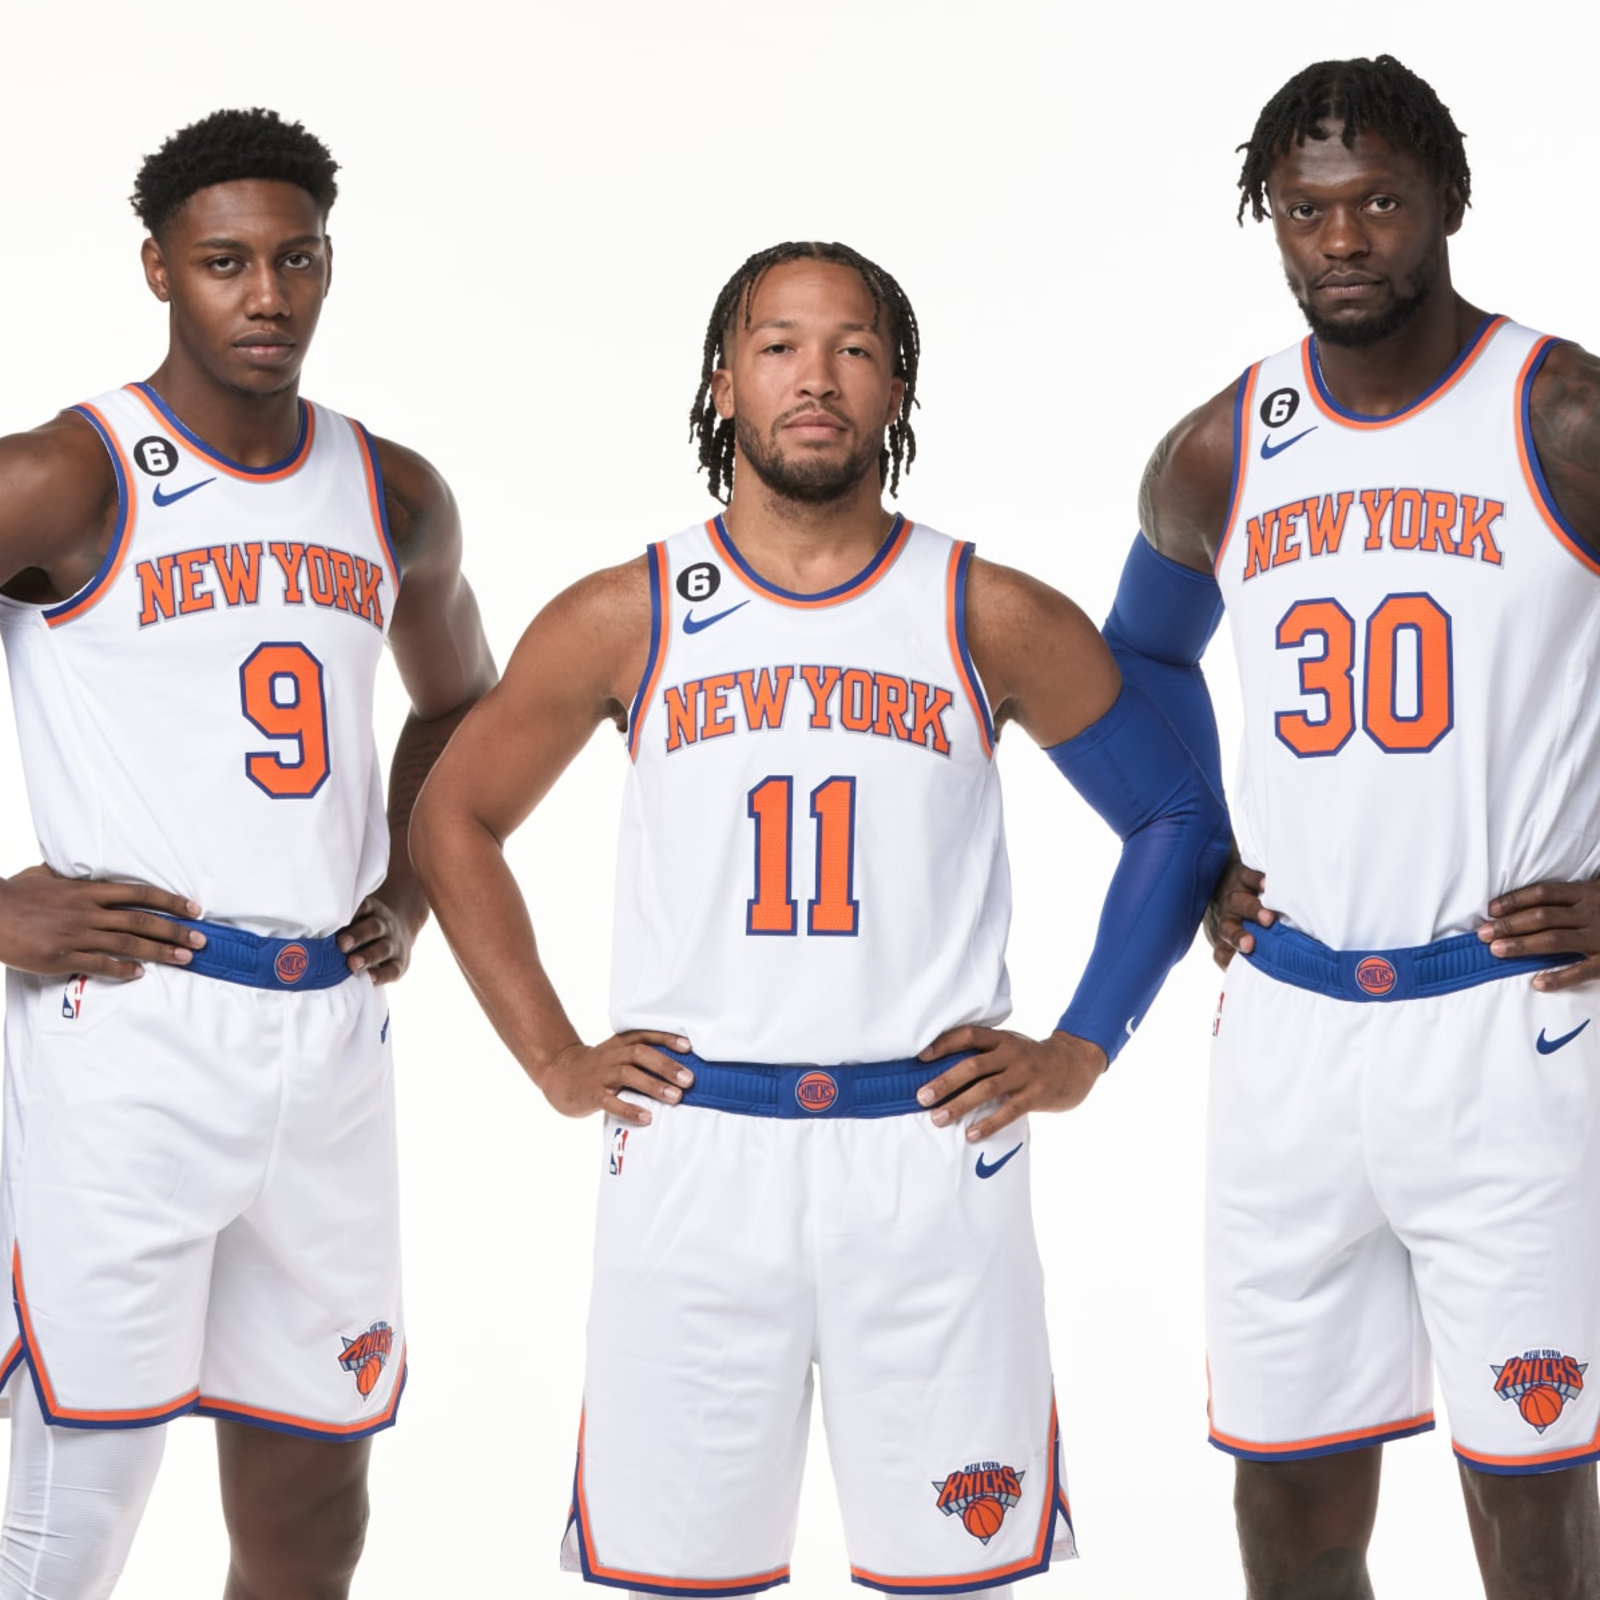 New York Knicks 22/23 City Edition Uniform: Bridging the Gap